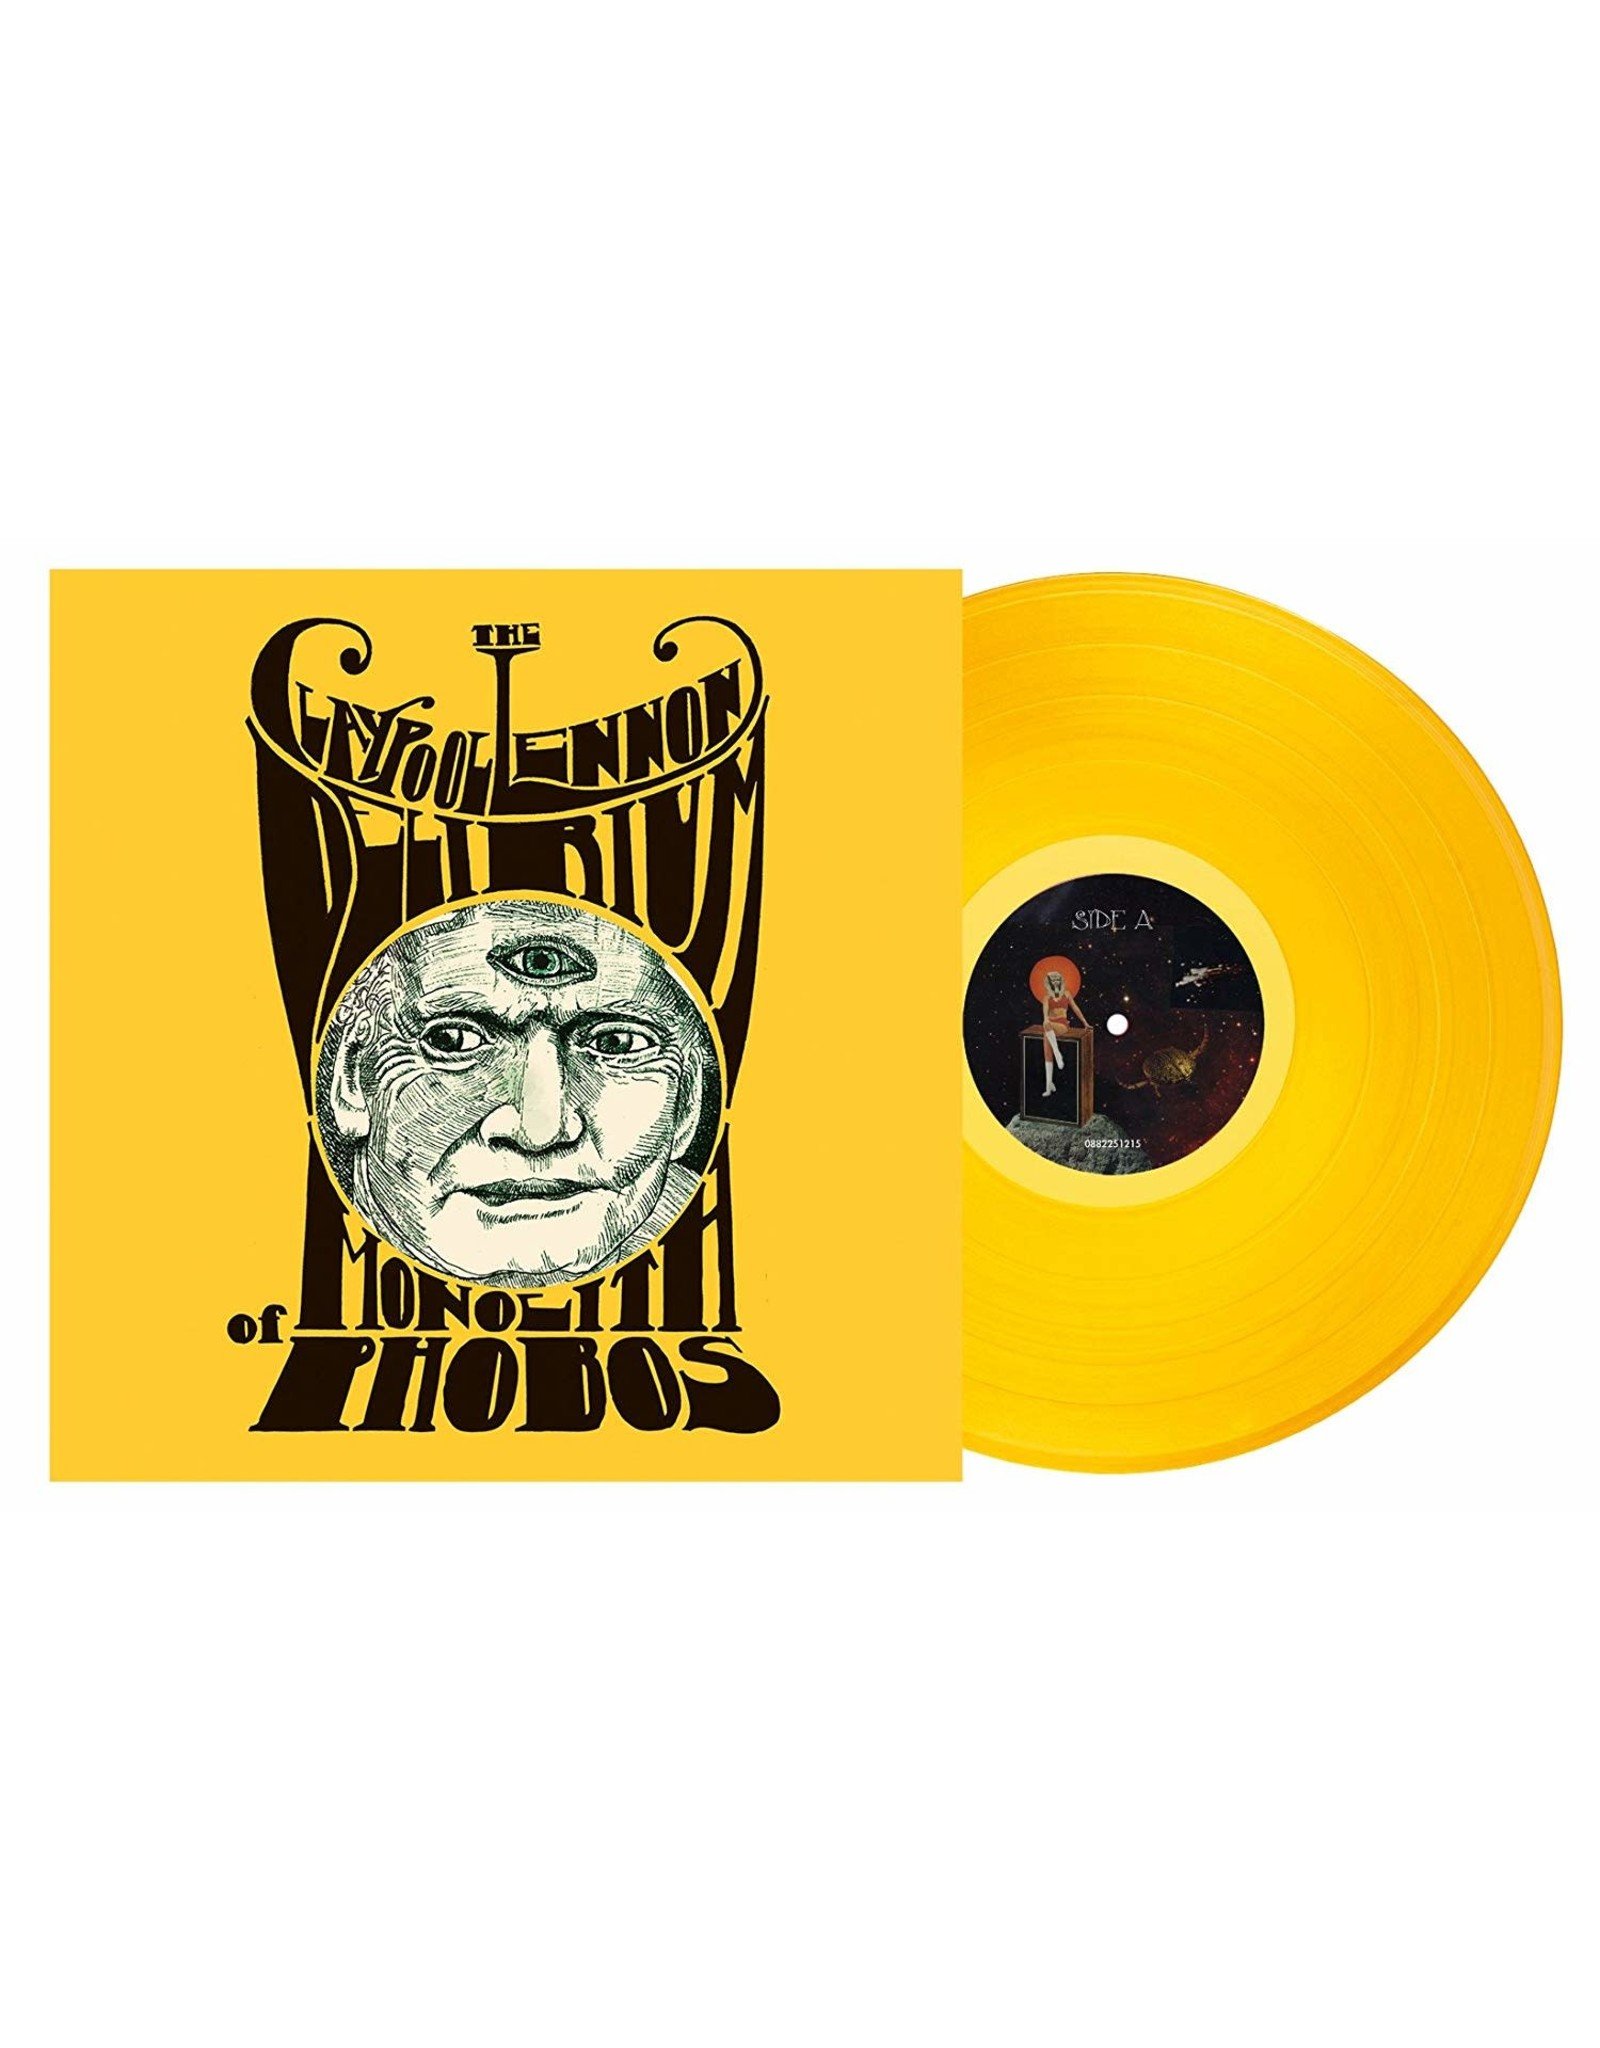 Claypool Lennon Delirium - Monolith of Phobos (Gold Vinyl)